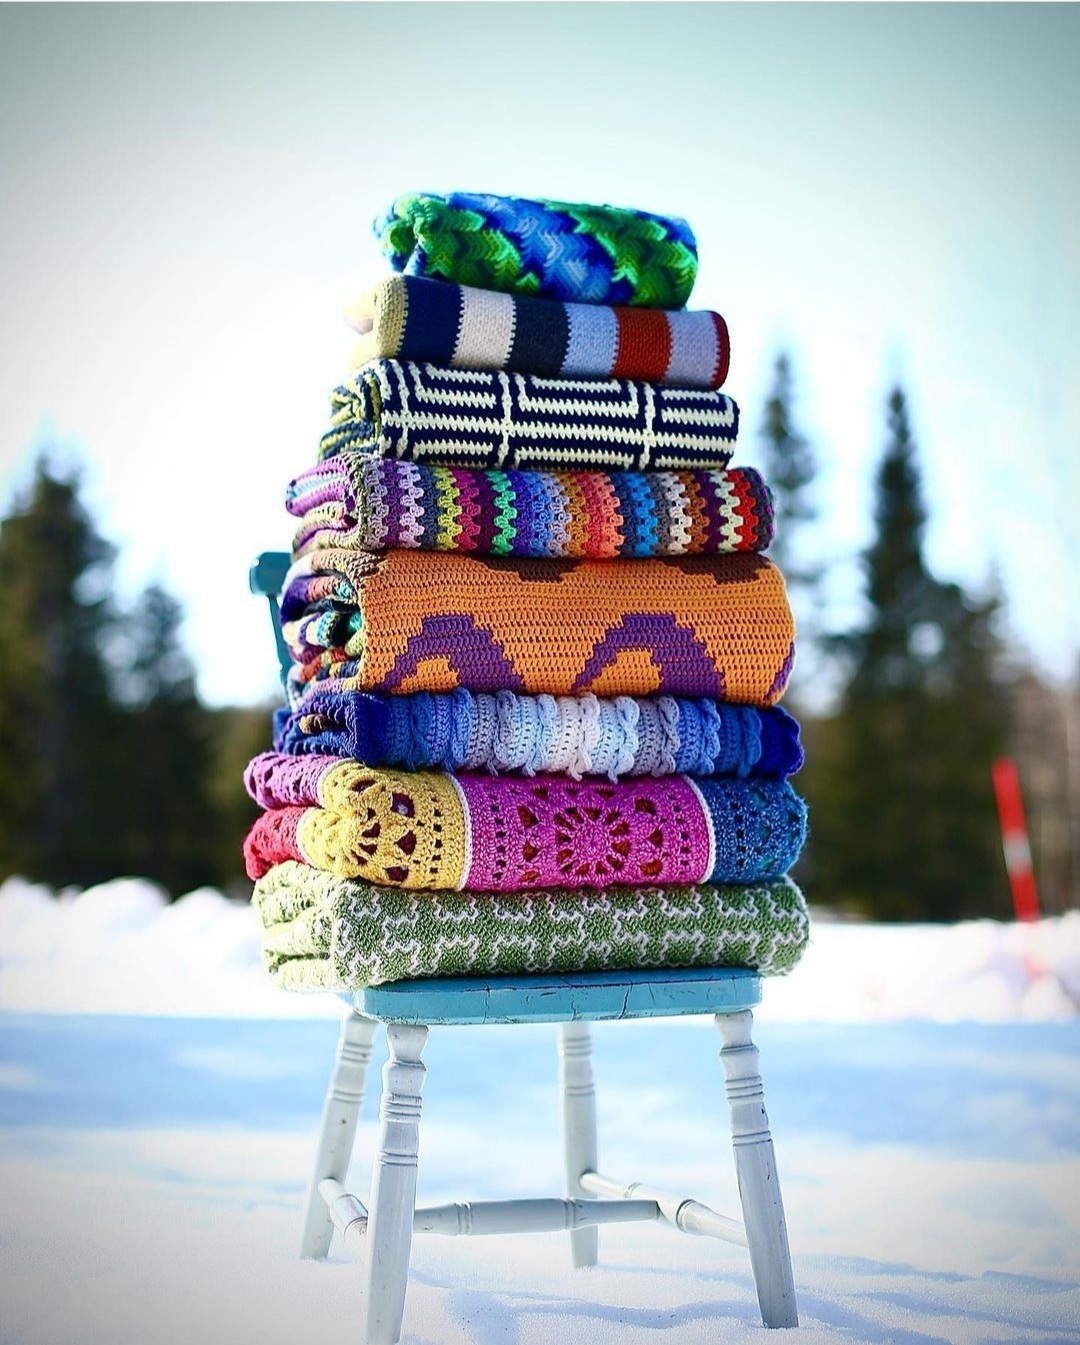 Mantas de crochet creadas por Martin up North.